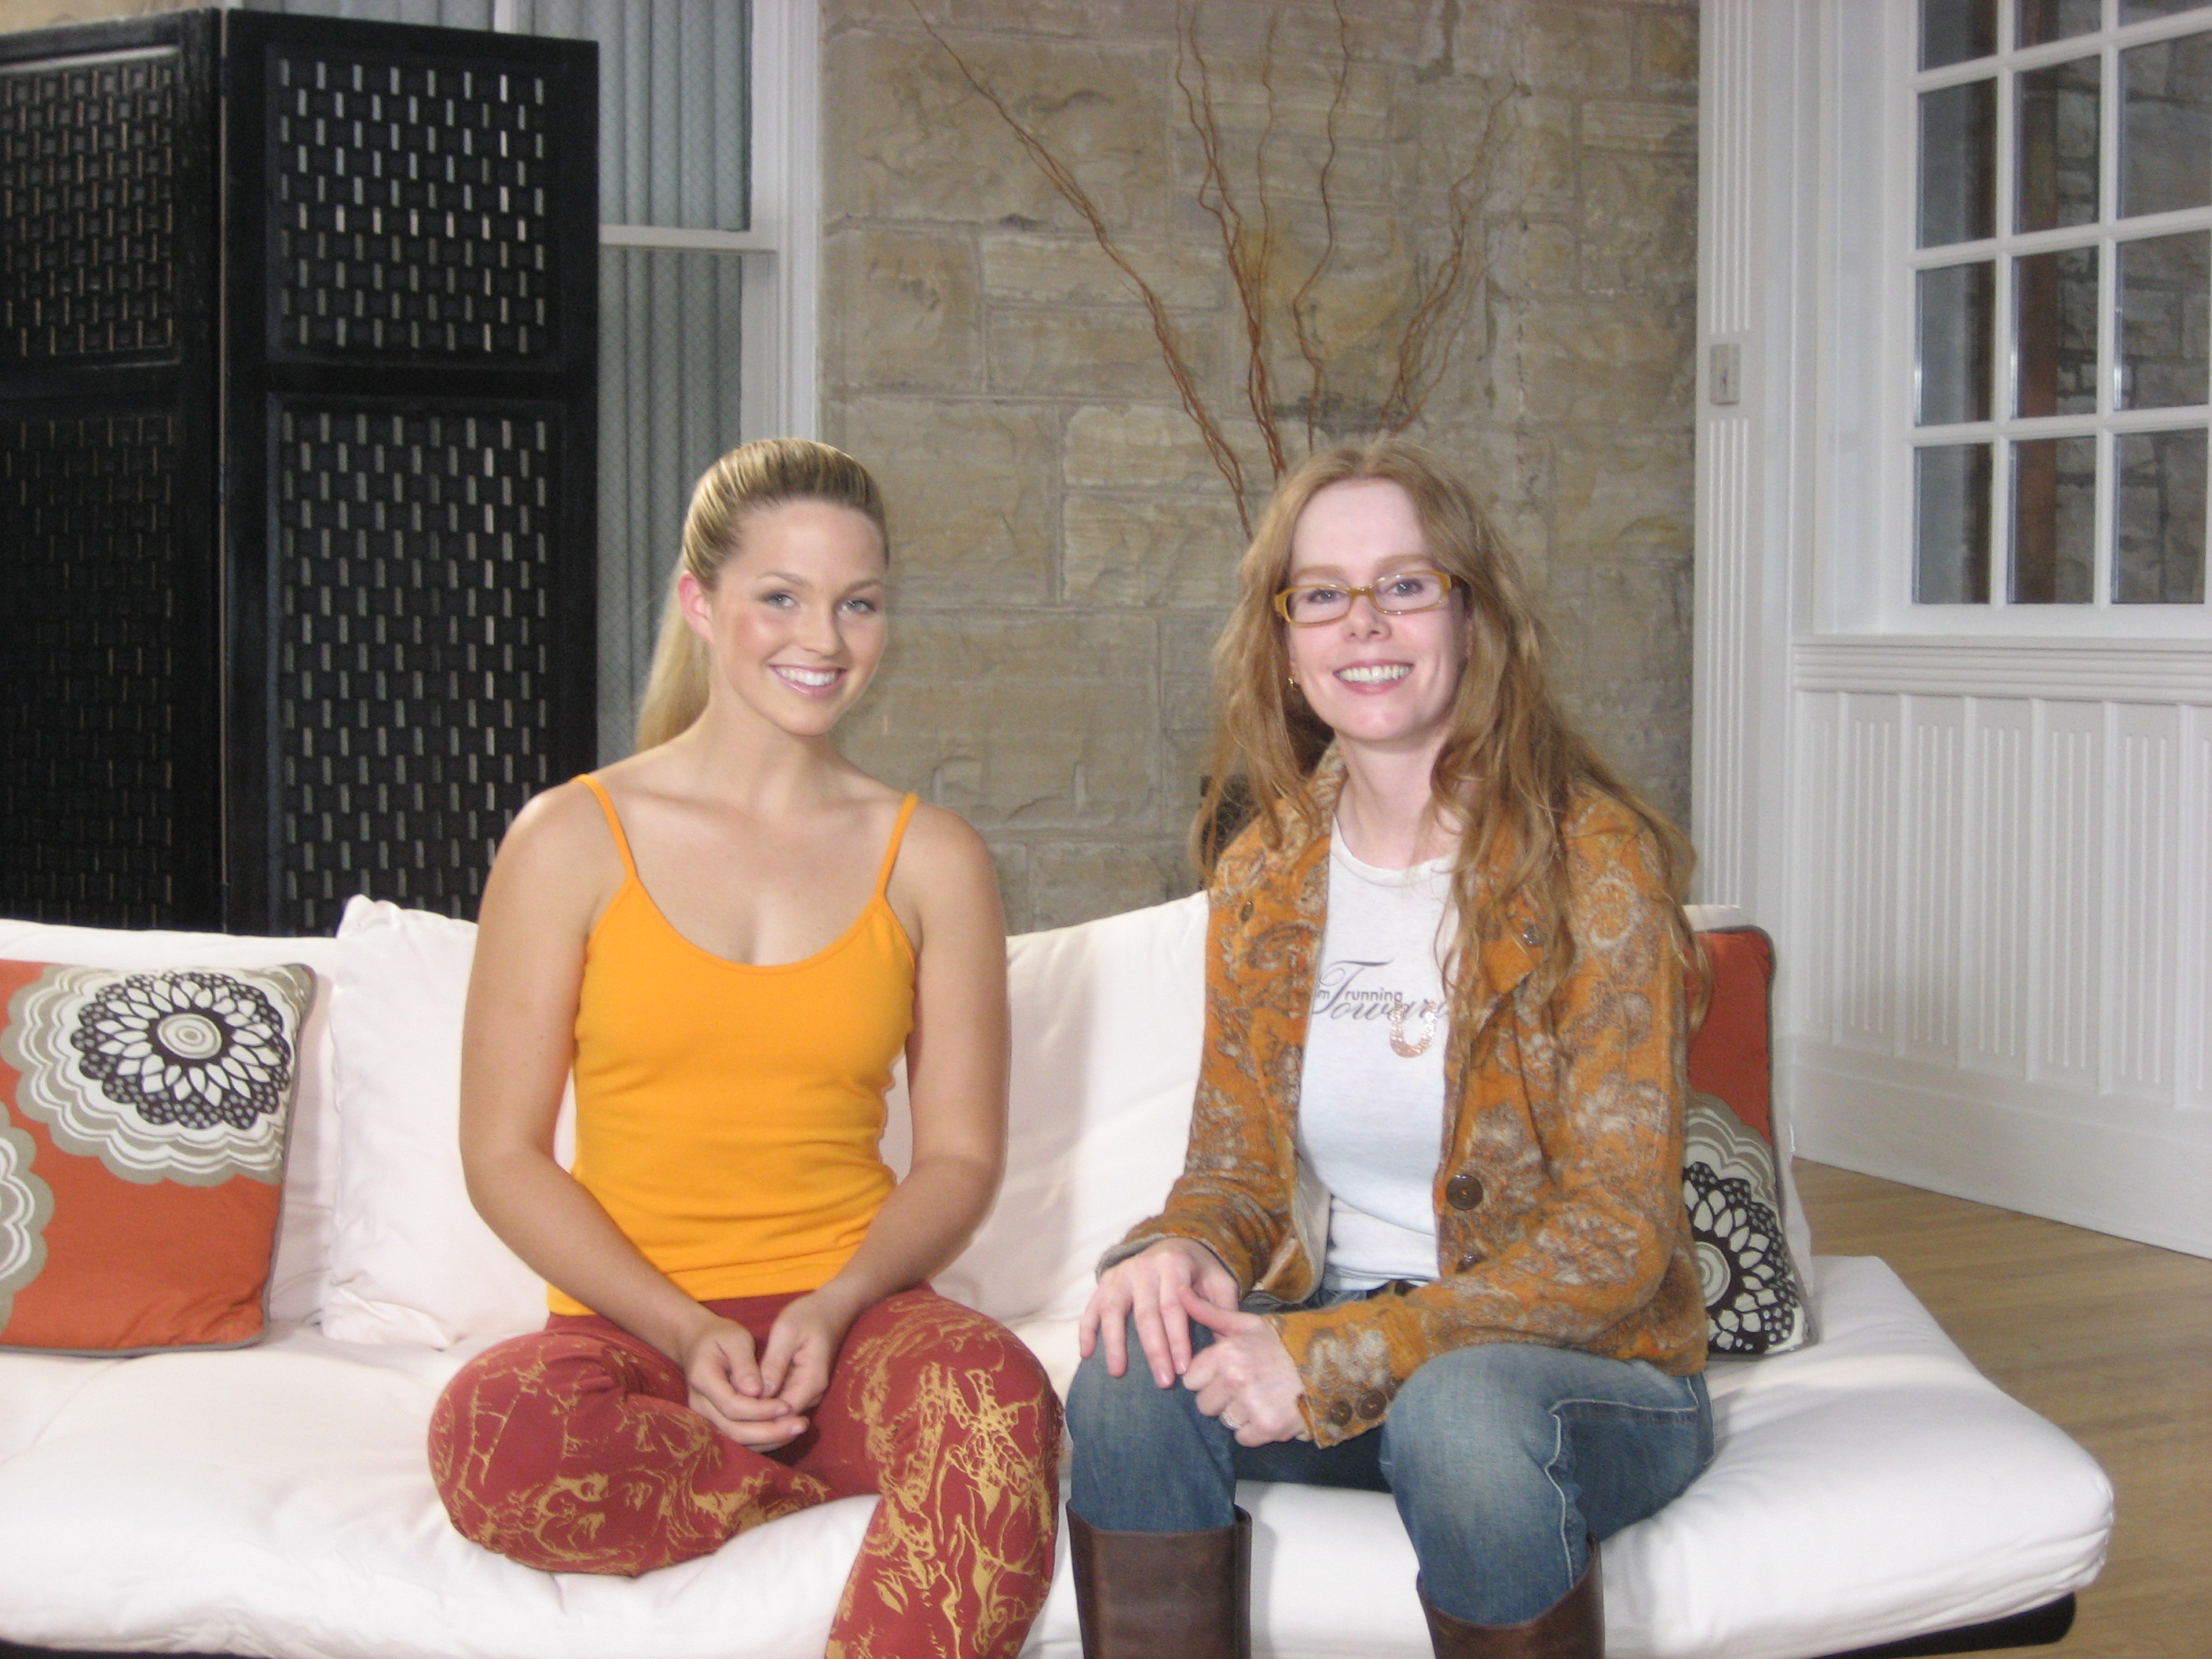 Allie LaForce and Vivian Schilling on set of Teen Yoga